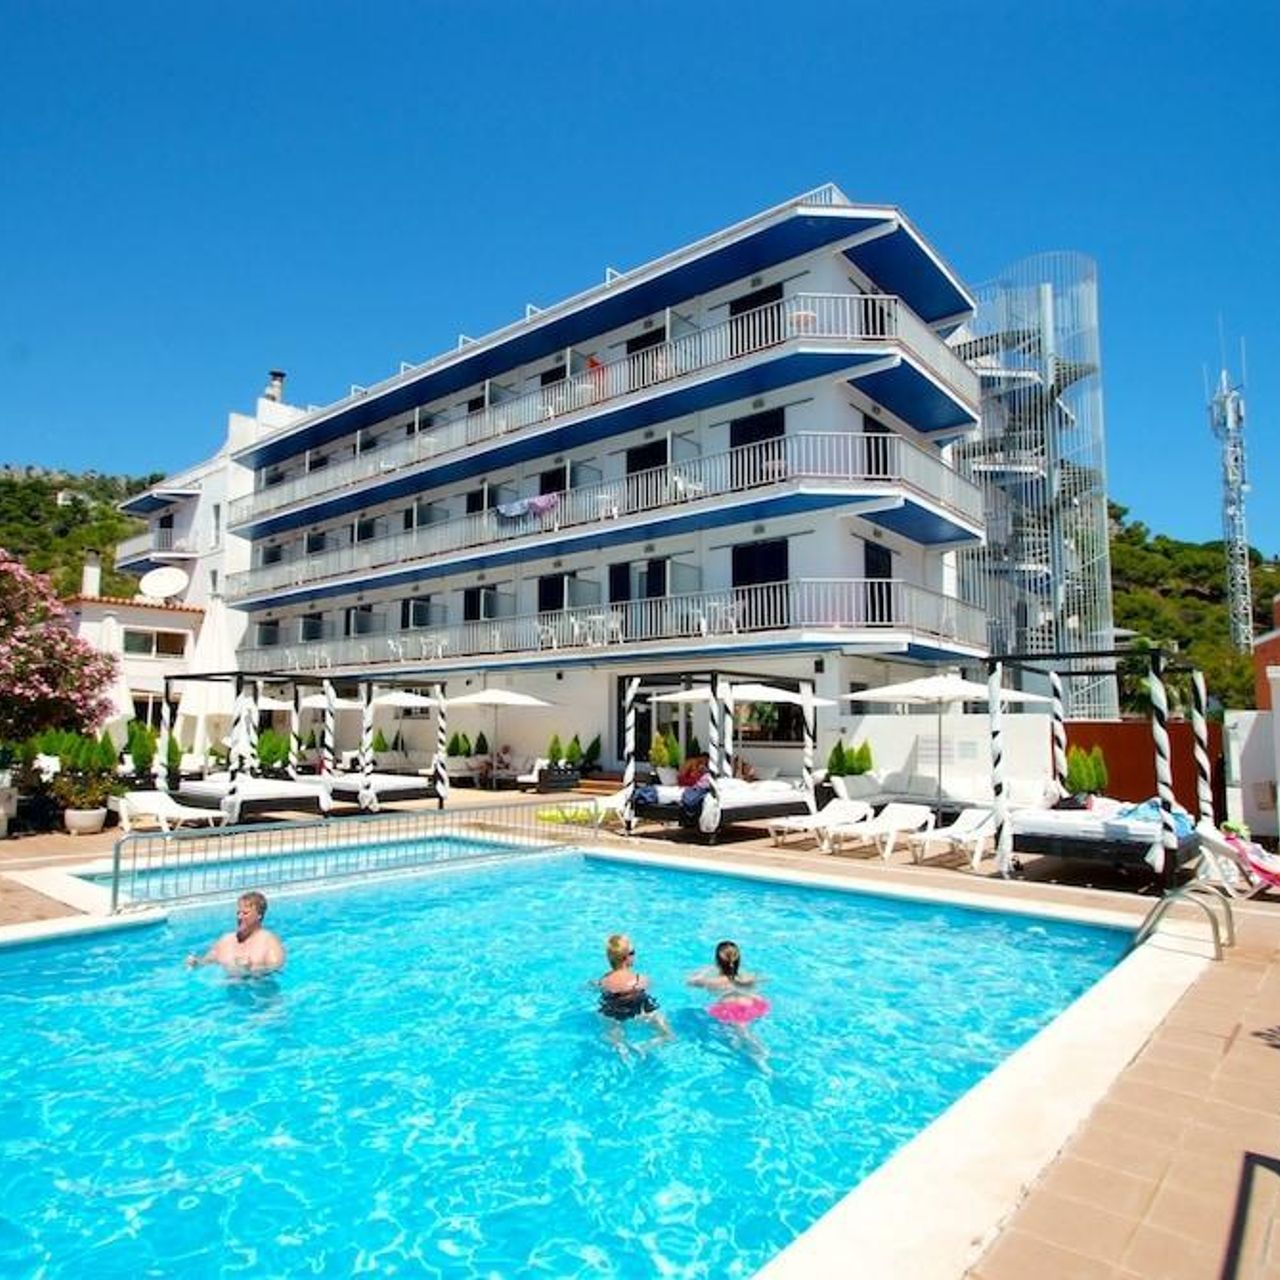 Hotel Nereida en Costa Brava - HOTEL INFO